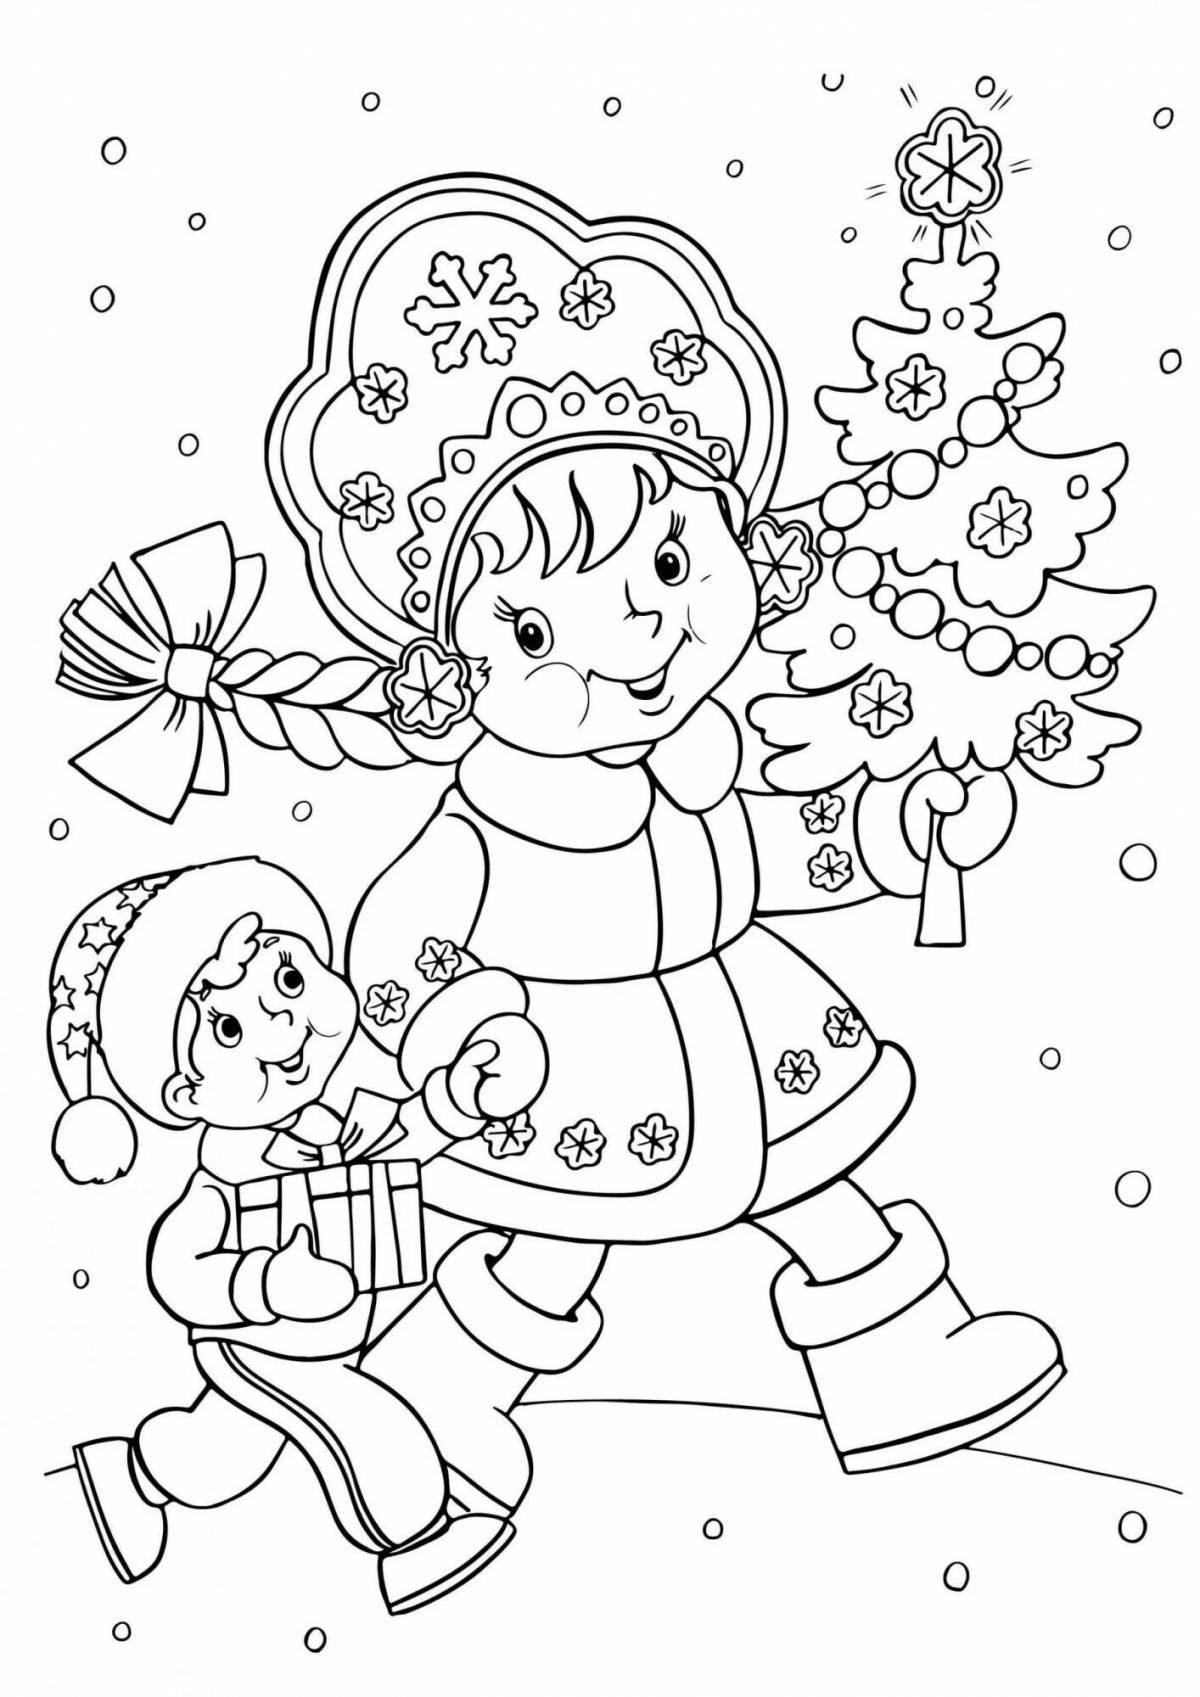 Rampant Christmas coloring book for kids